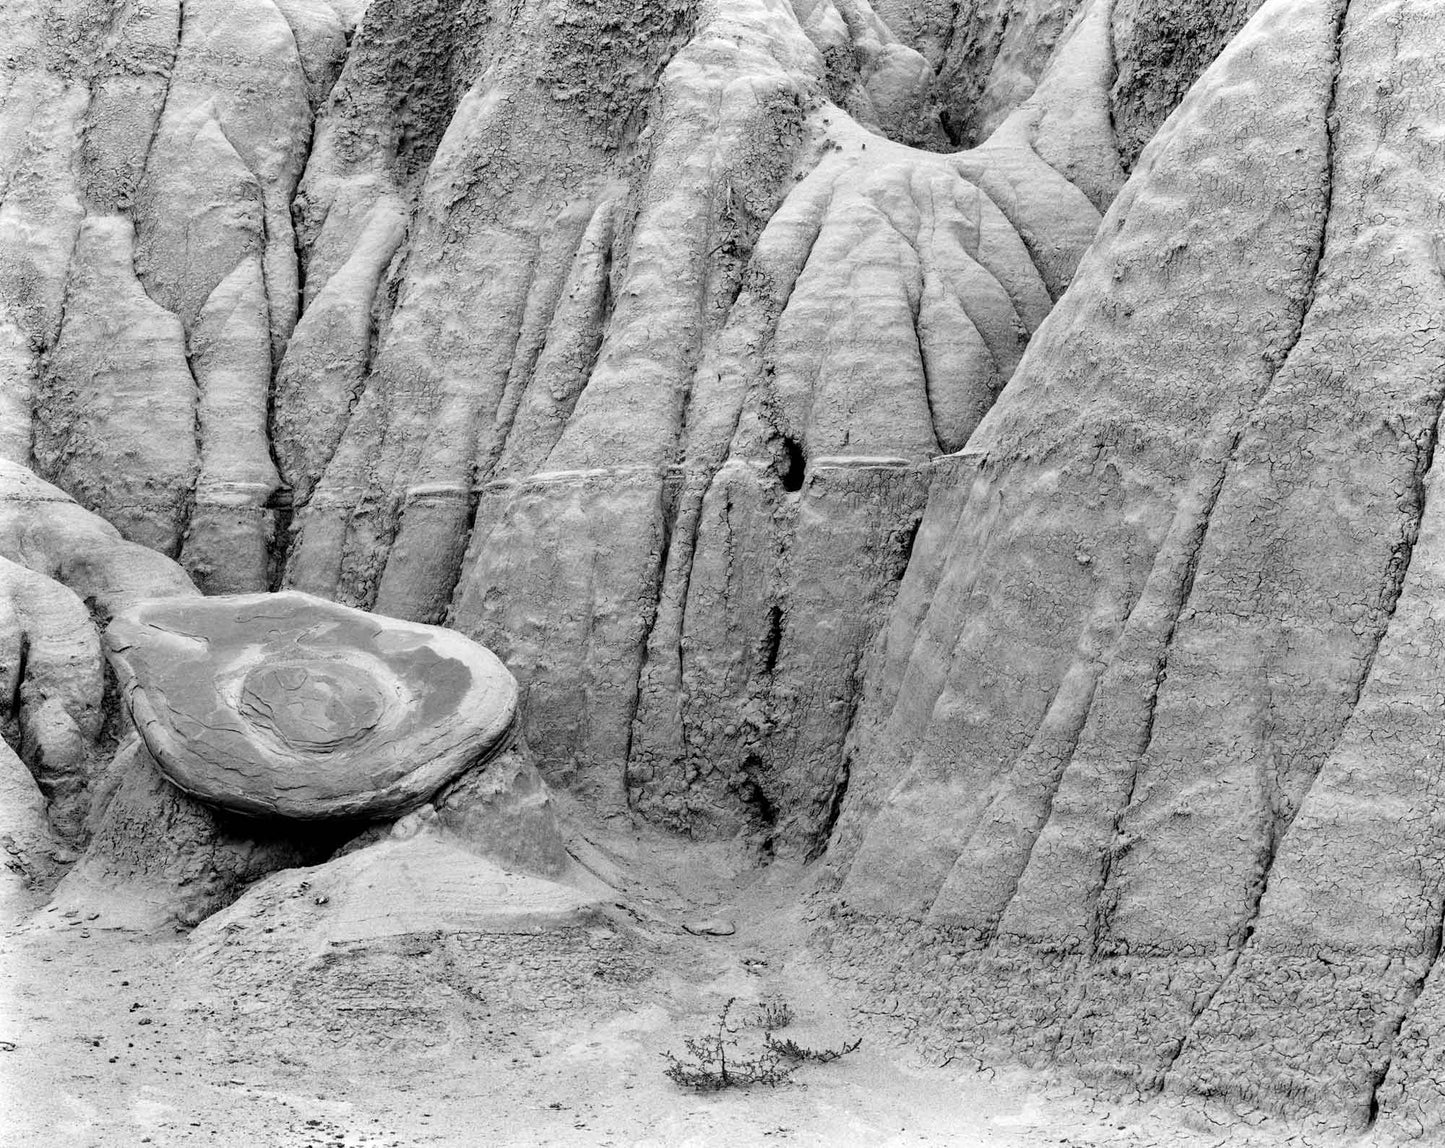 Sandstone Concretion, Dinosaur Provincial Park, Alberta 1989